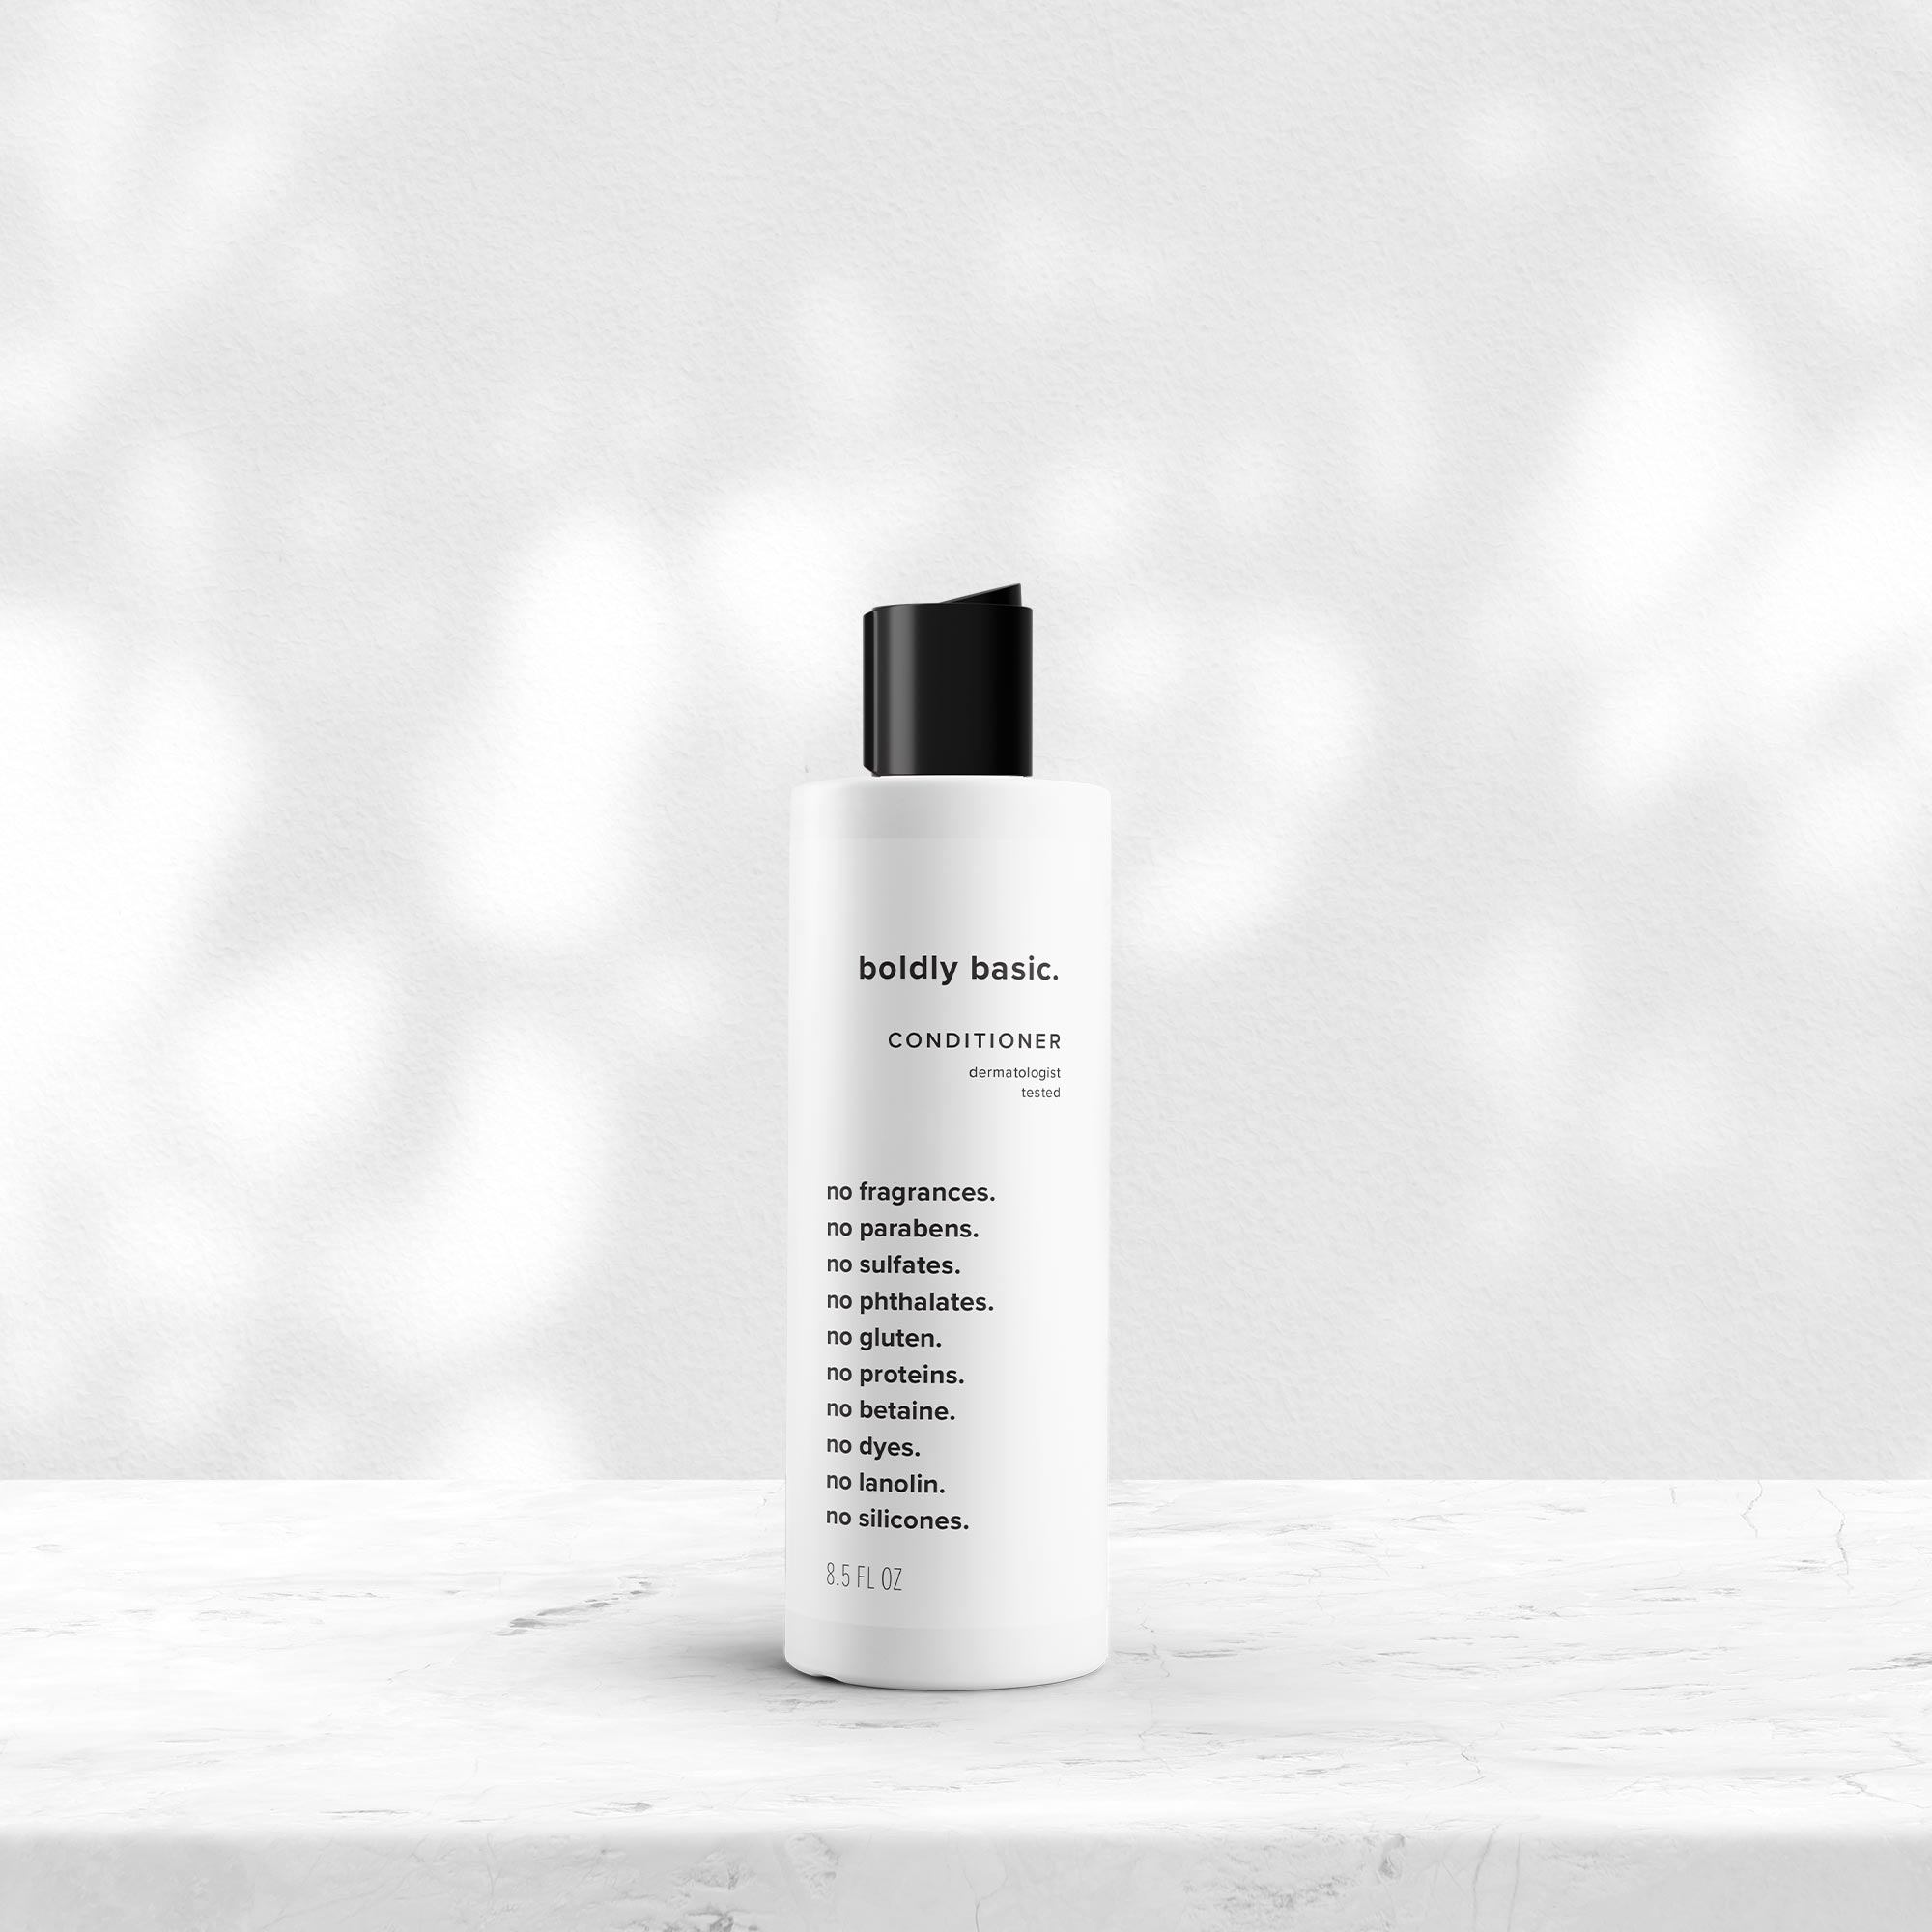 karolina krol studio boldly basic minimalist fragrance free no toxins conditioner sustainable brand packaging design